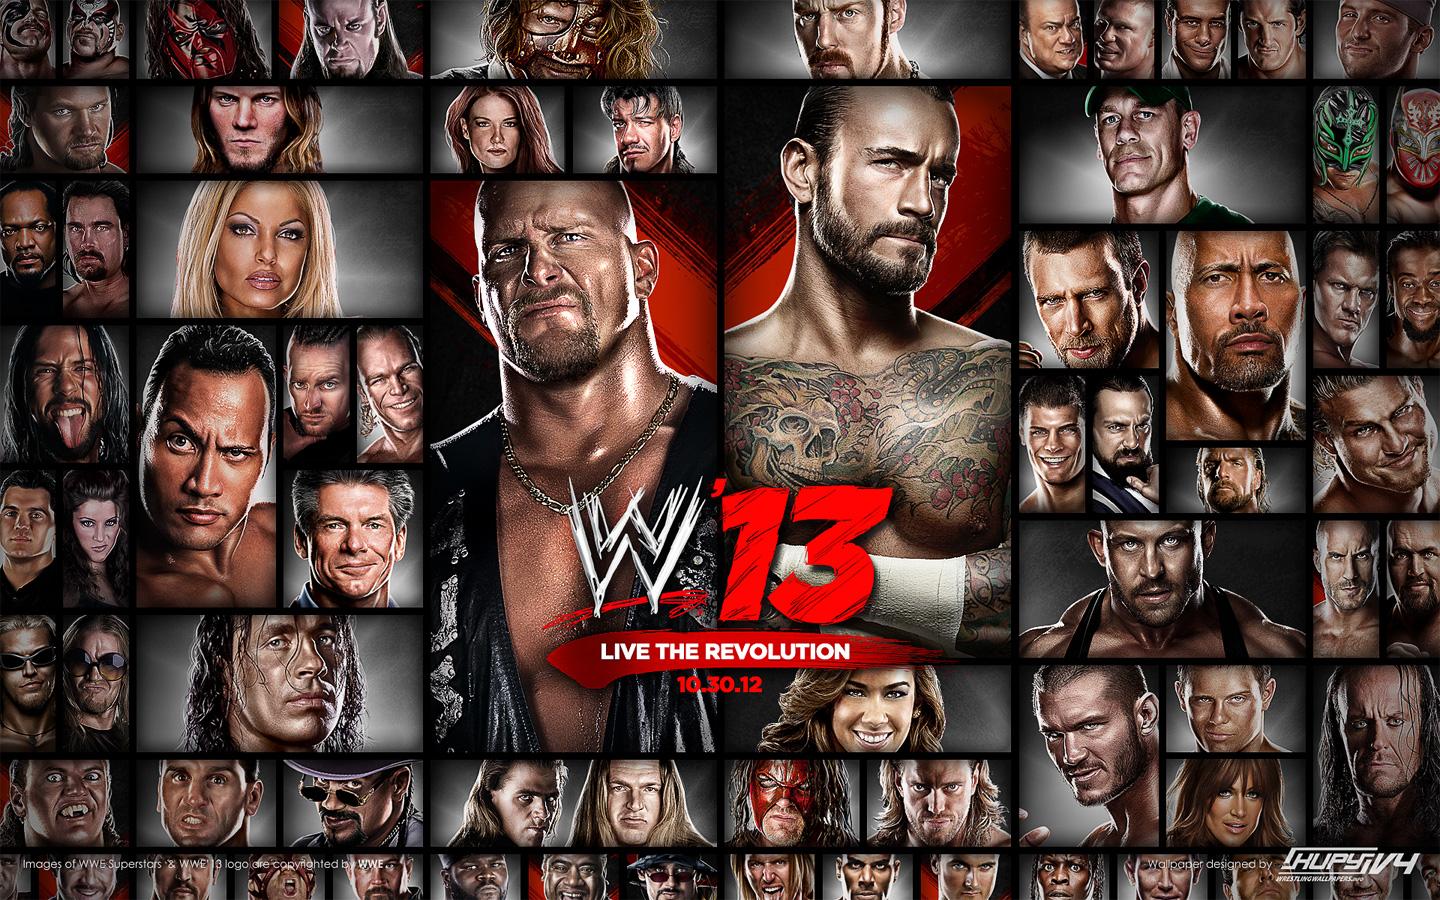 WWE '13 Wallpapers